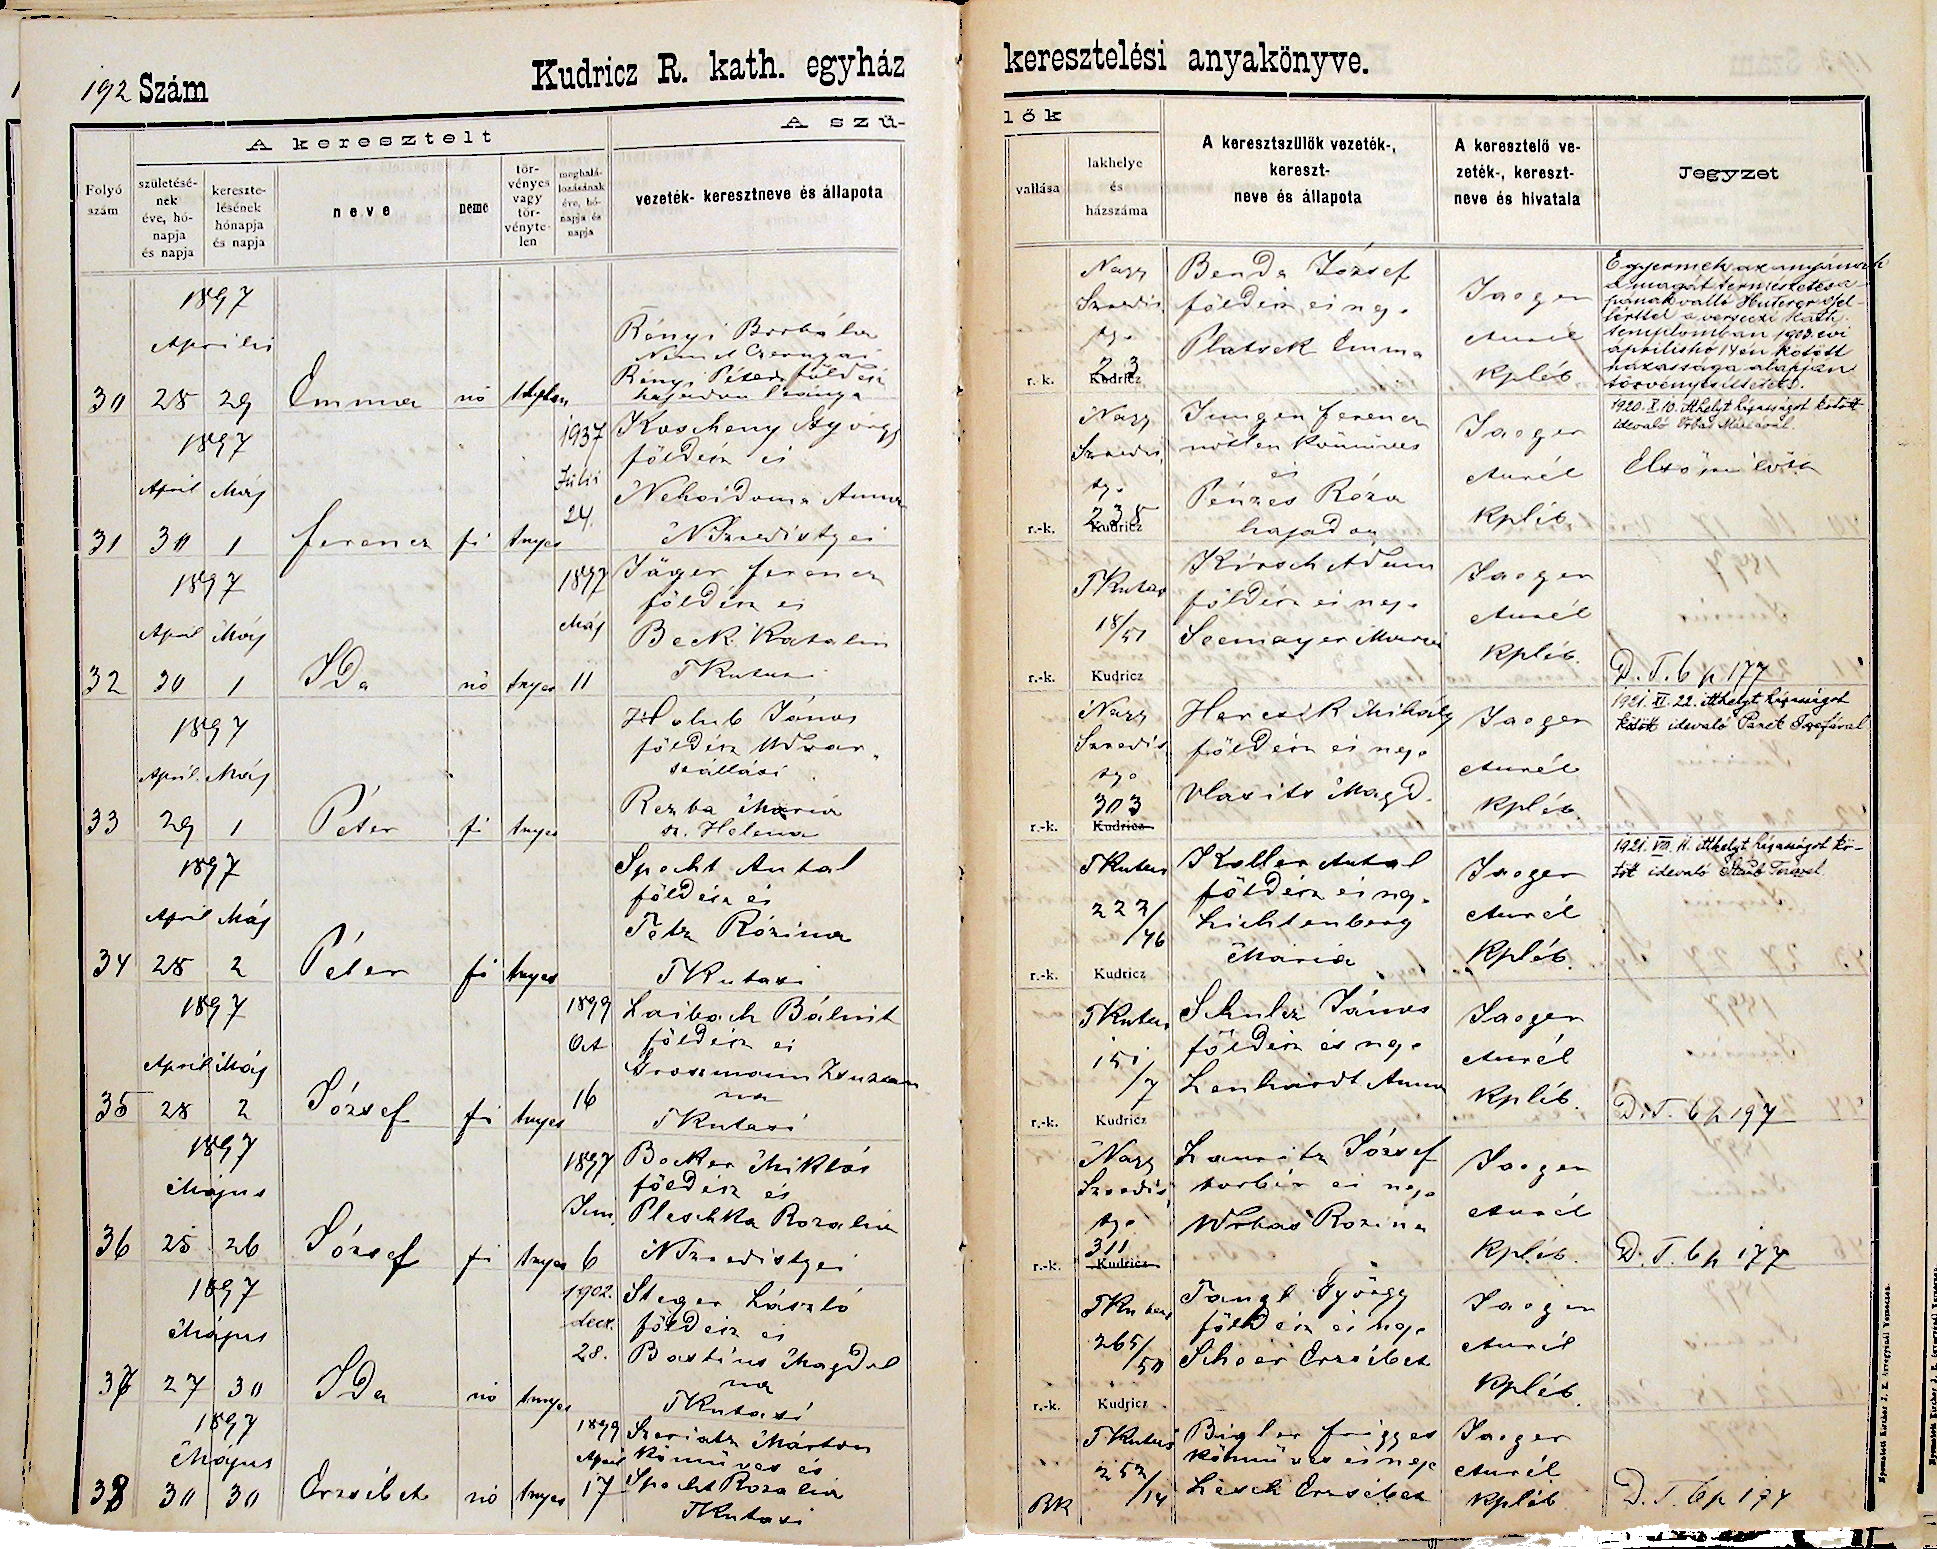 images/church_records/BIRTHS/1884-1899B/1897/192